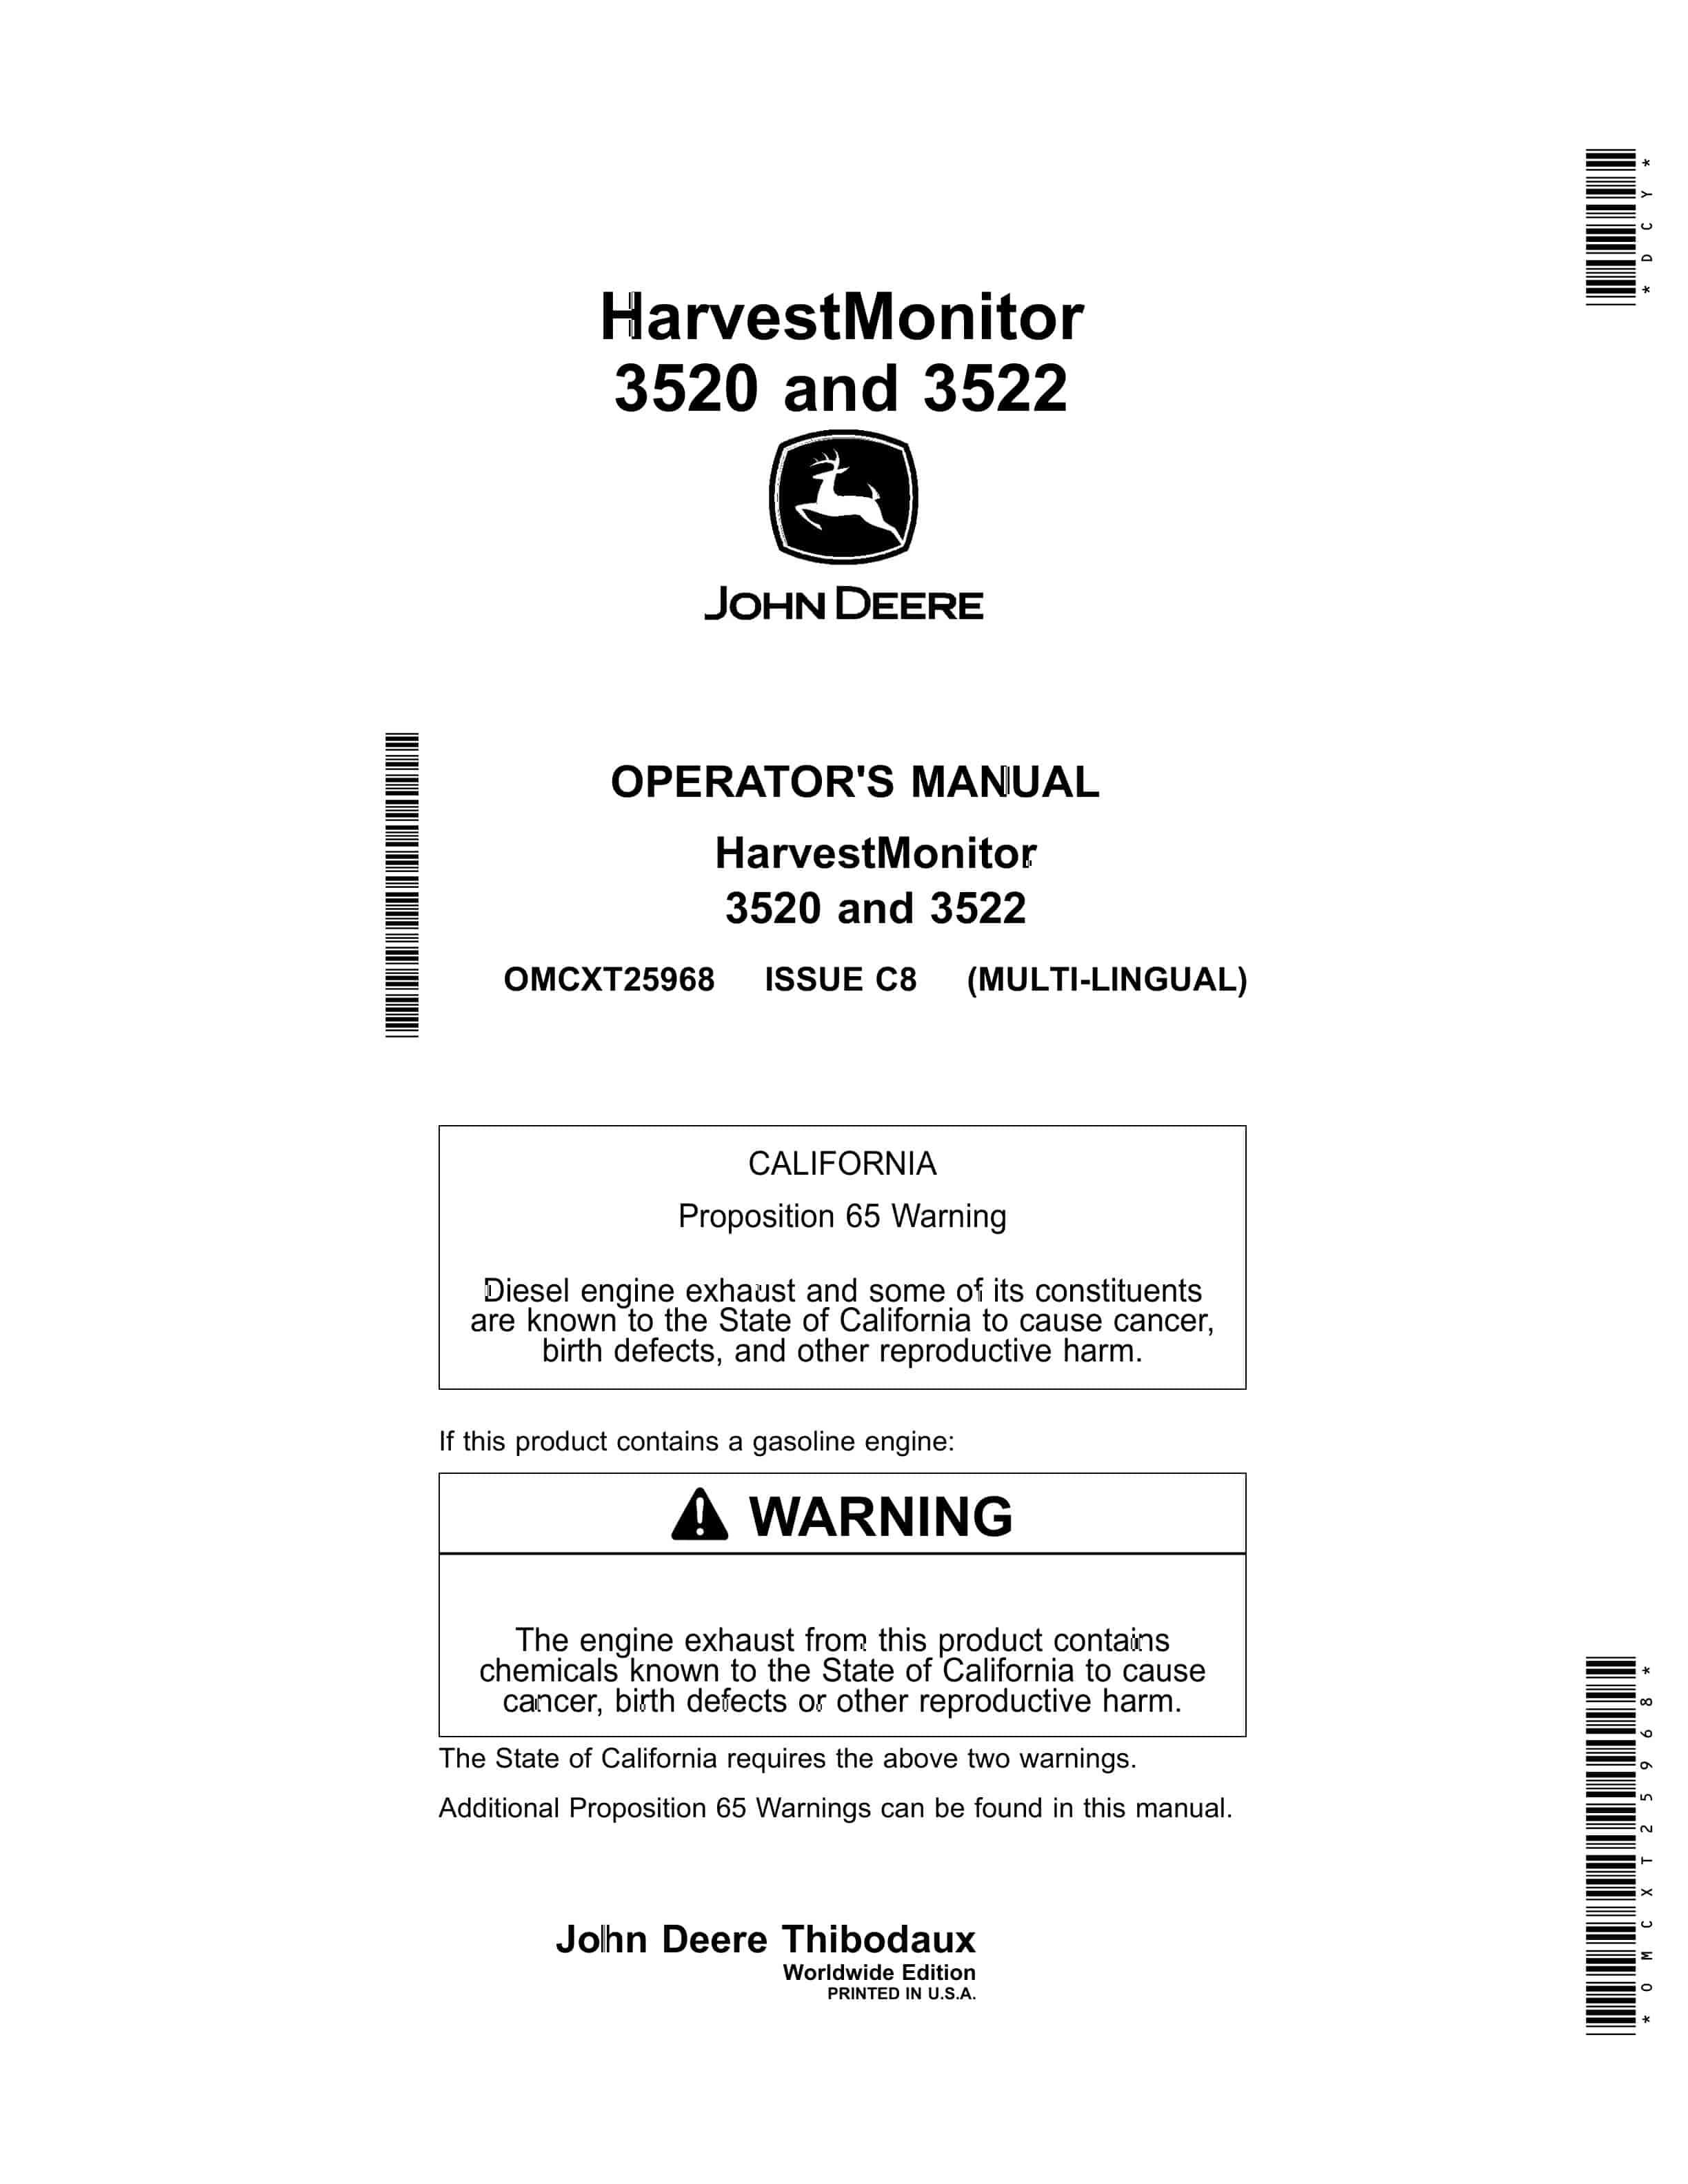 John Deere 3520 and 3522 Harvest Monitor Operator Manual OMCXT25968-1